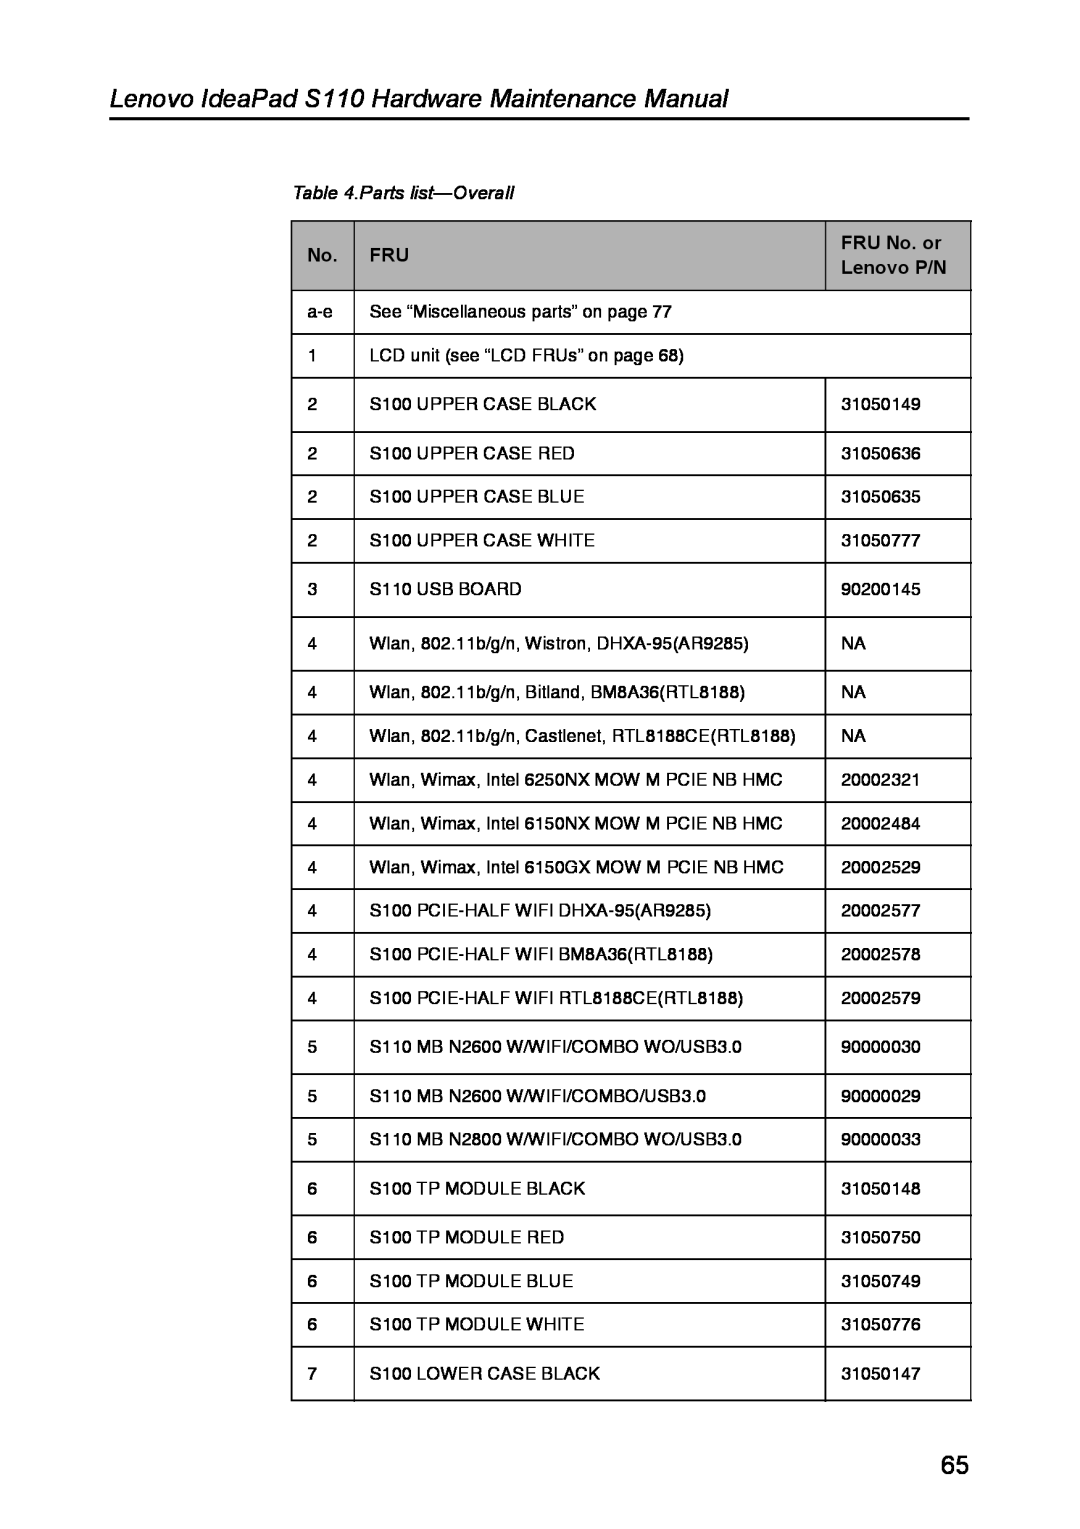 Lenovo manual Parts list-Overall, FRU No. or, Lenovo P/N, Lenovo IdeaPad S110 Hardware Maintenance Manual 